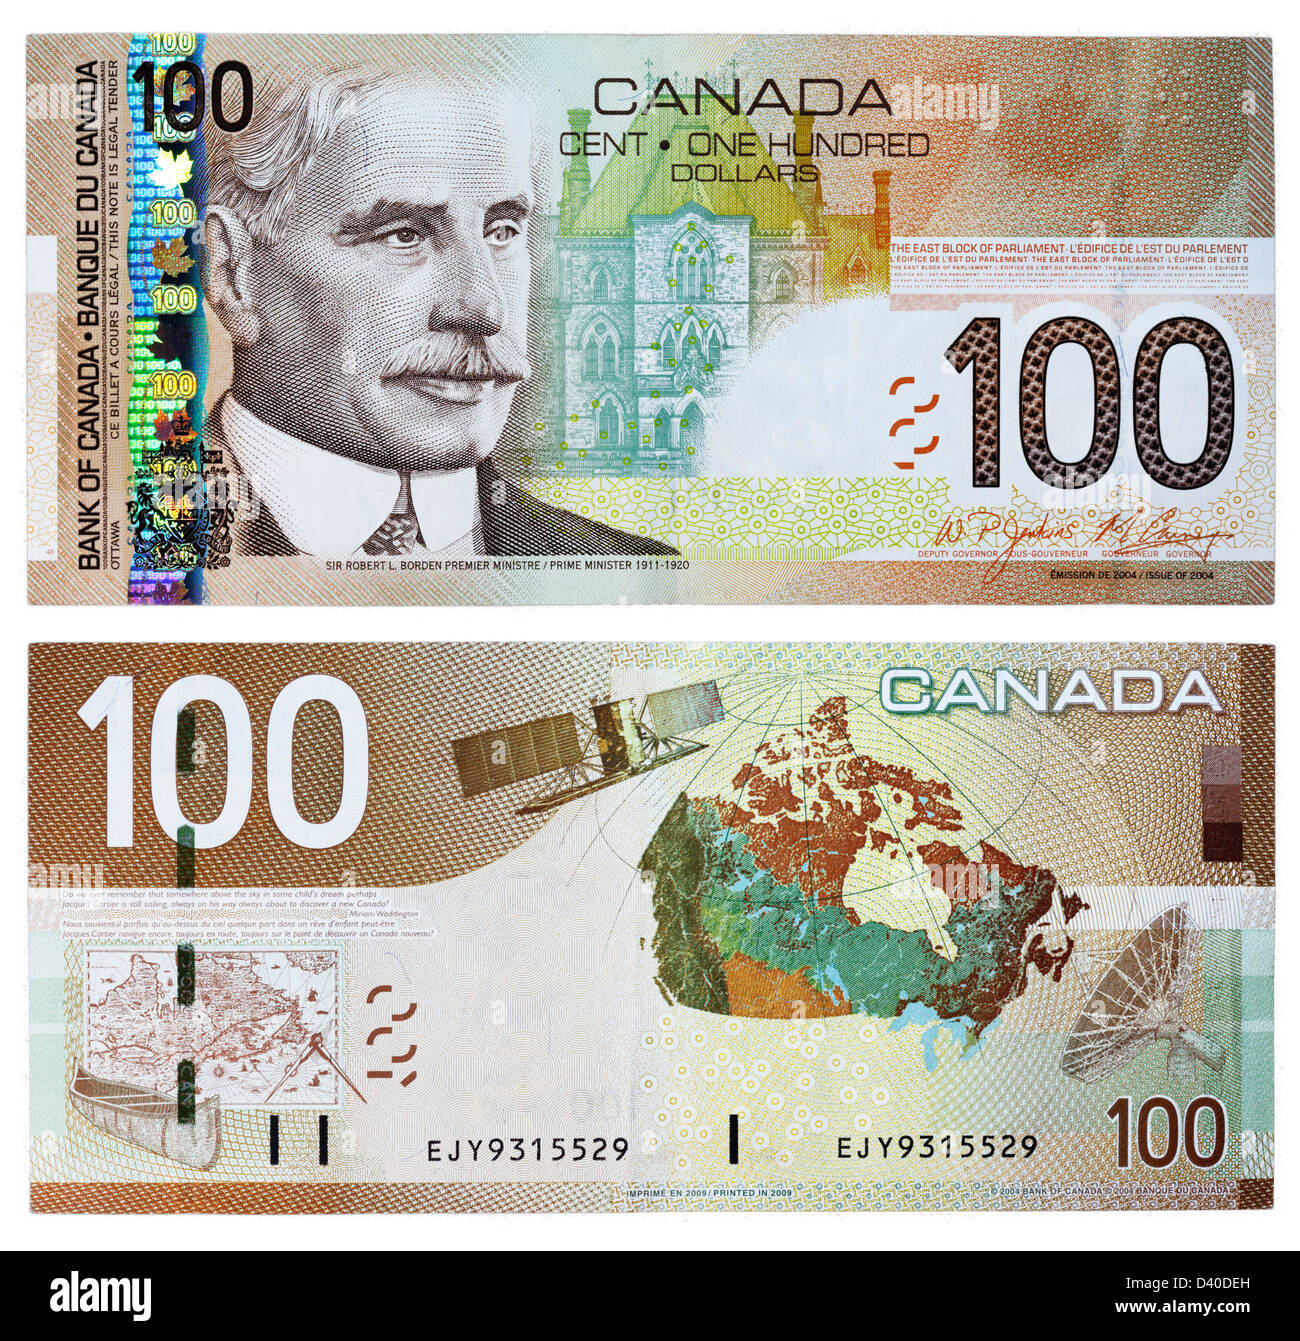 Viskeus Nauwkeurig functie 100 Dollars banknote, Sir Robert Borden, prime minister (1911-1920),  Canada, 2004 Stock Photo - Alamy